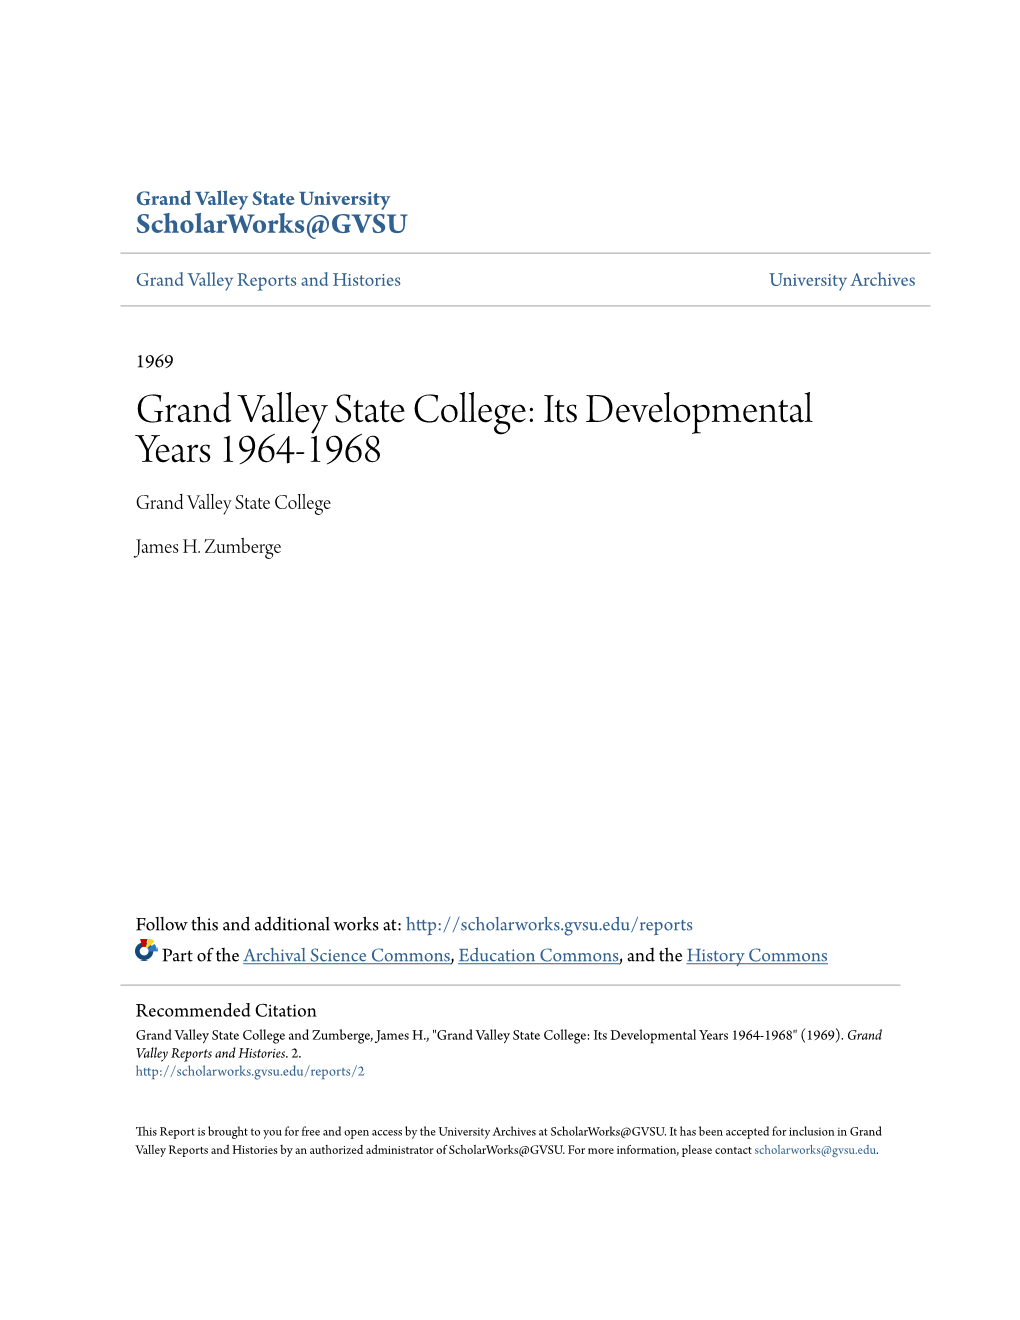 Grand Valley State College: Its Developmental Years 1964-1968 Grand Valley State College